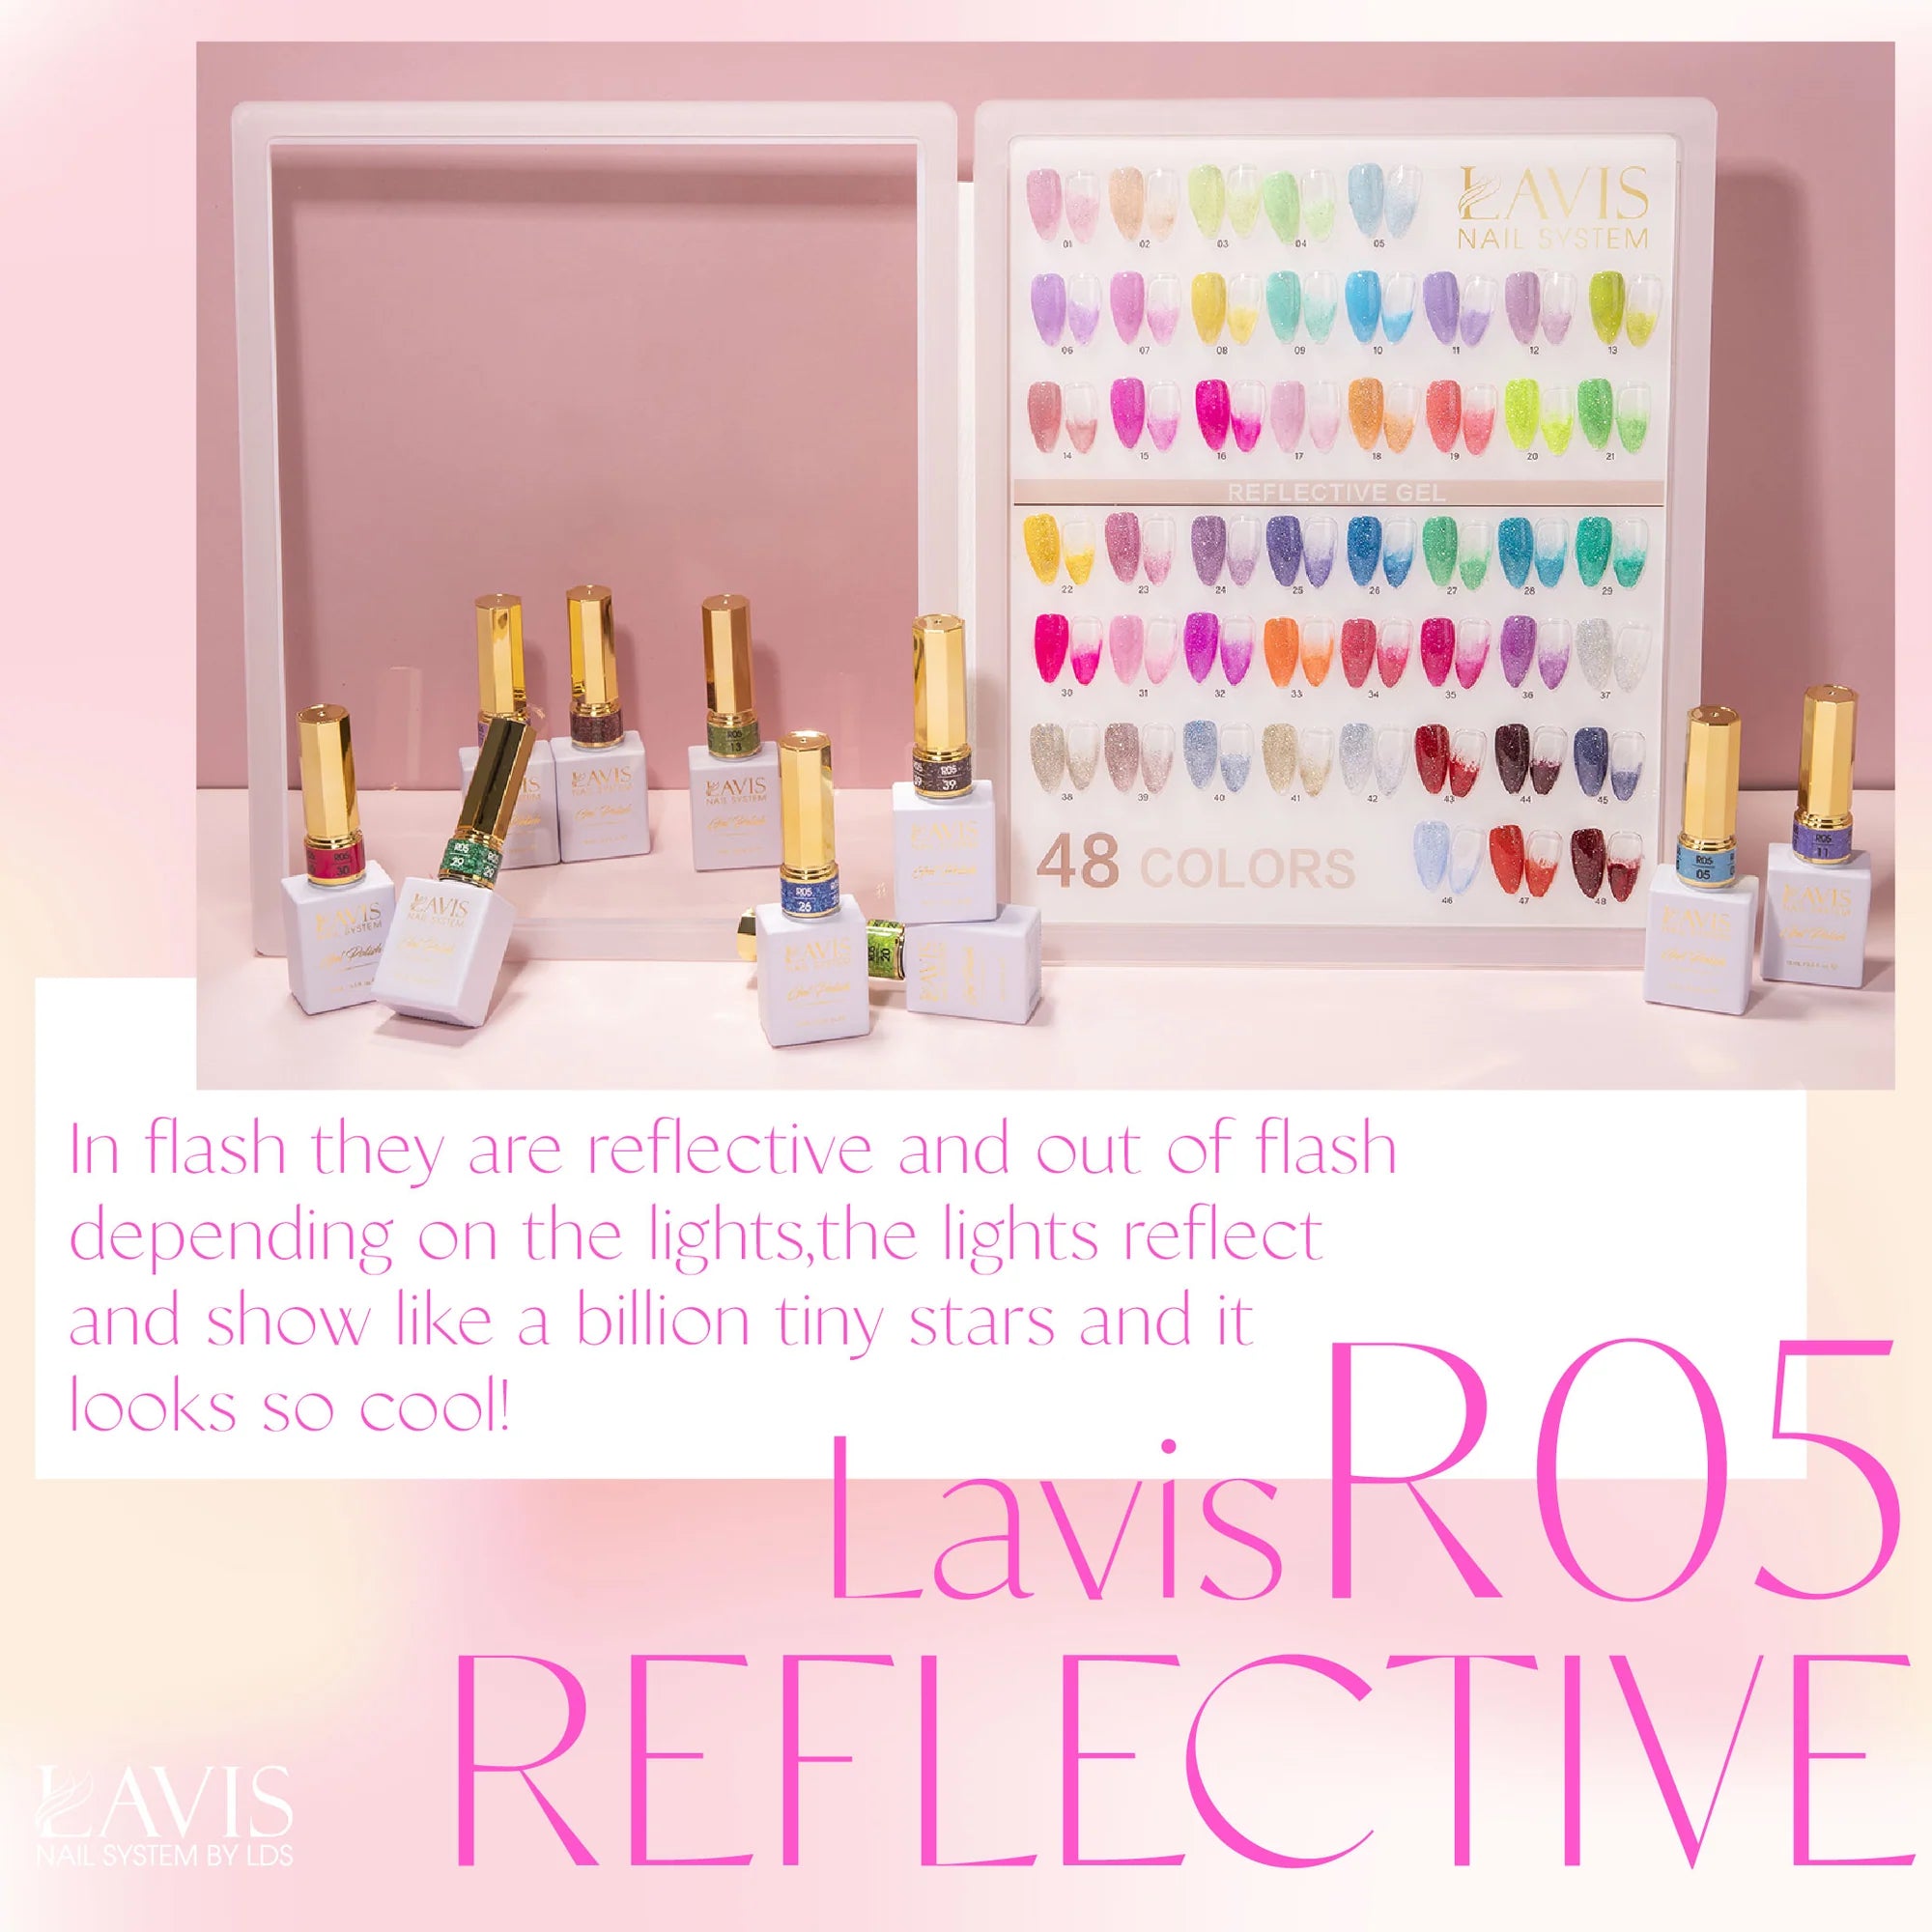 LAVIS Reflective R05 - Set 12 Colors (01-12) - Gel Polish 0.5 oz - Blossom Bass Reflective Collection